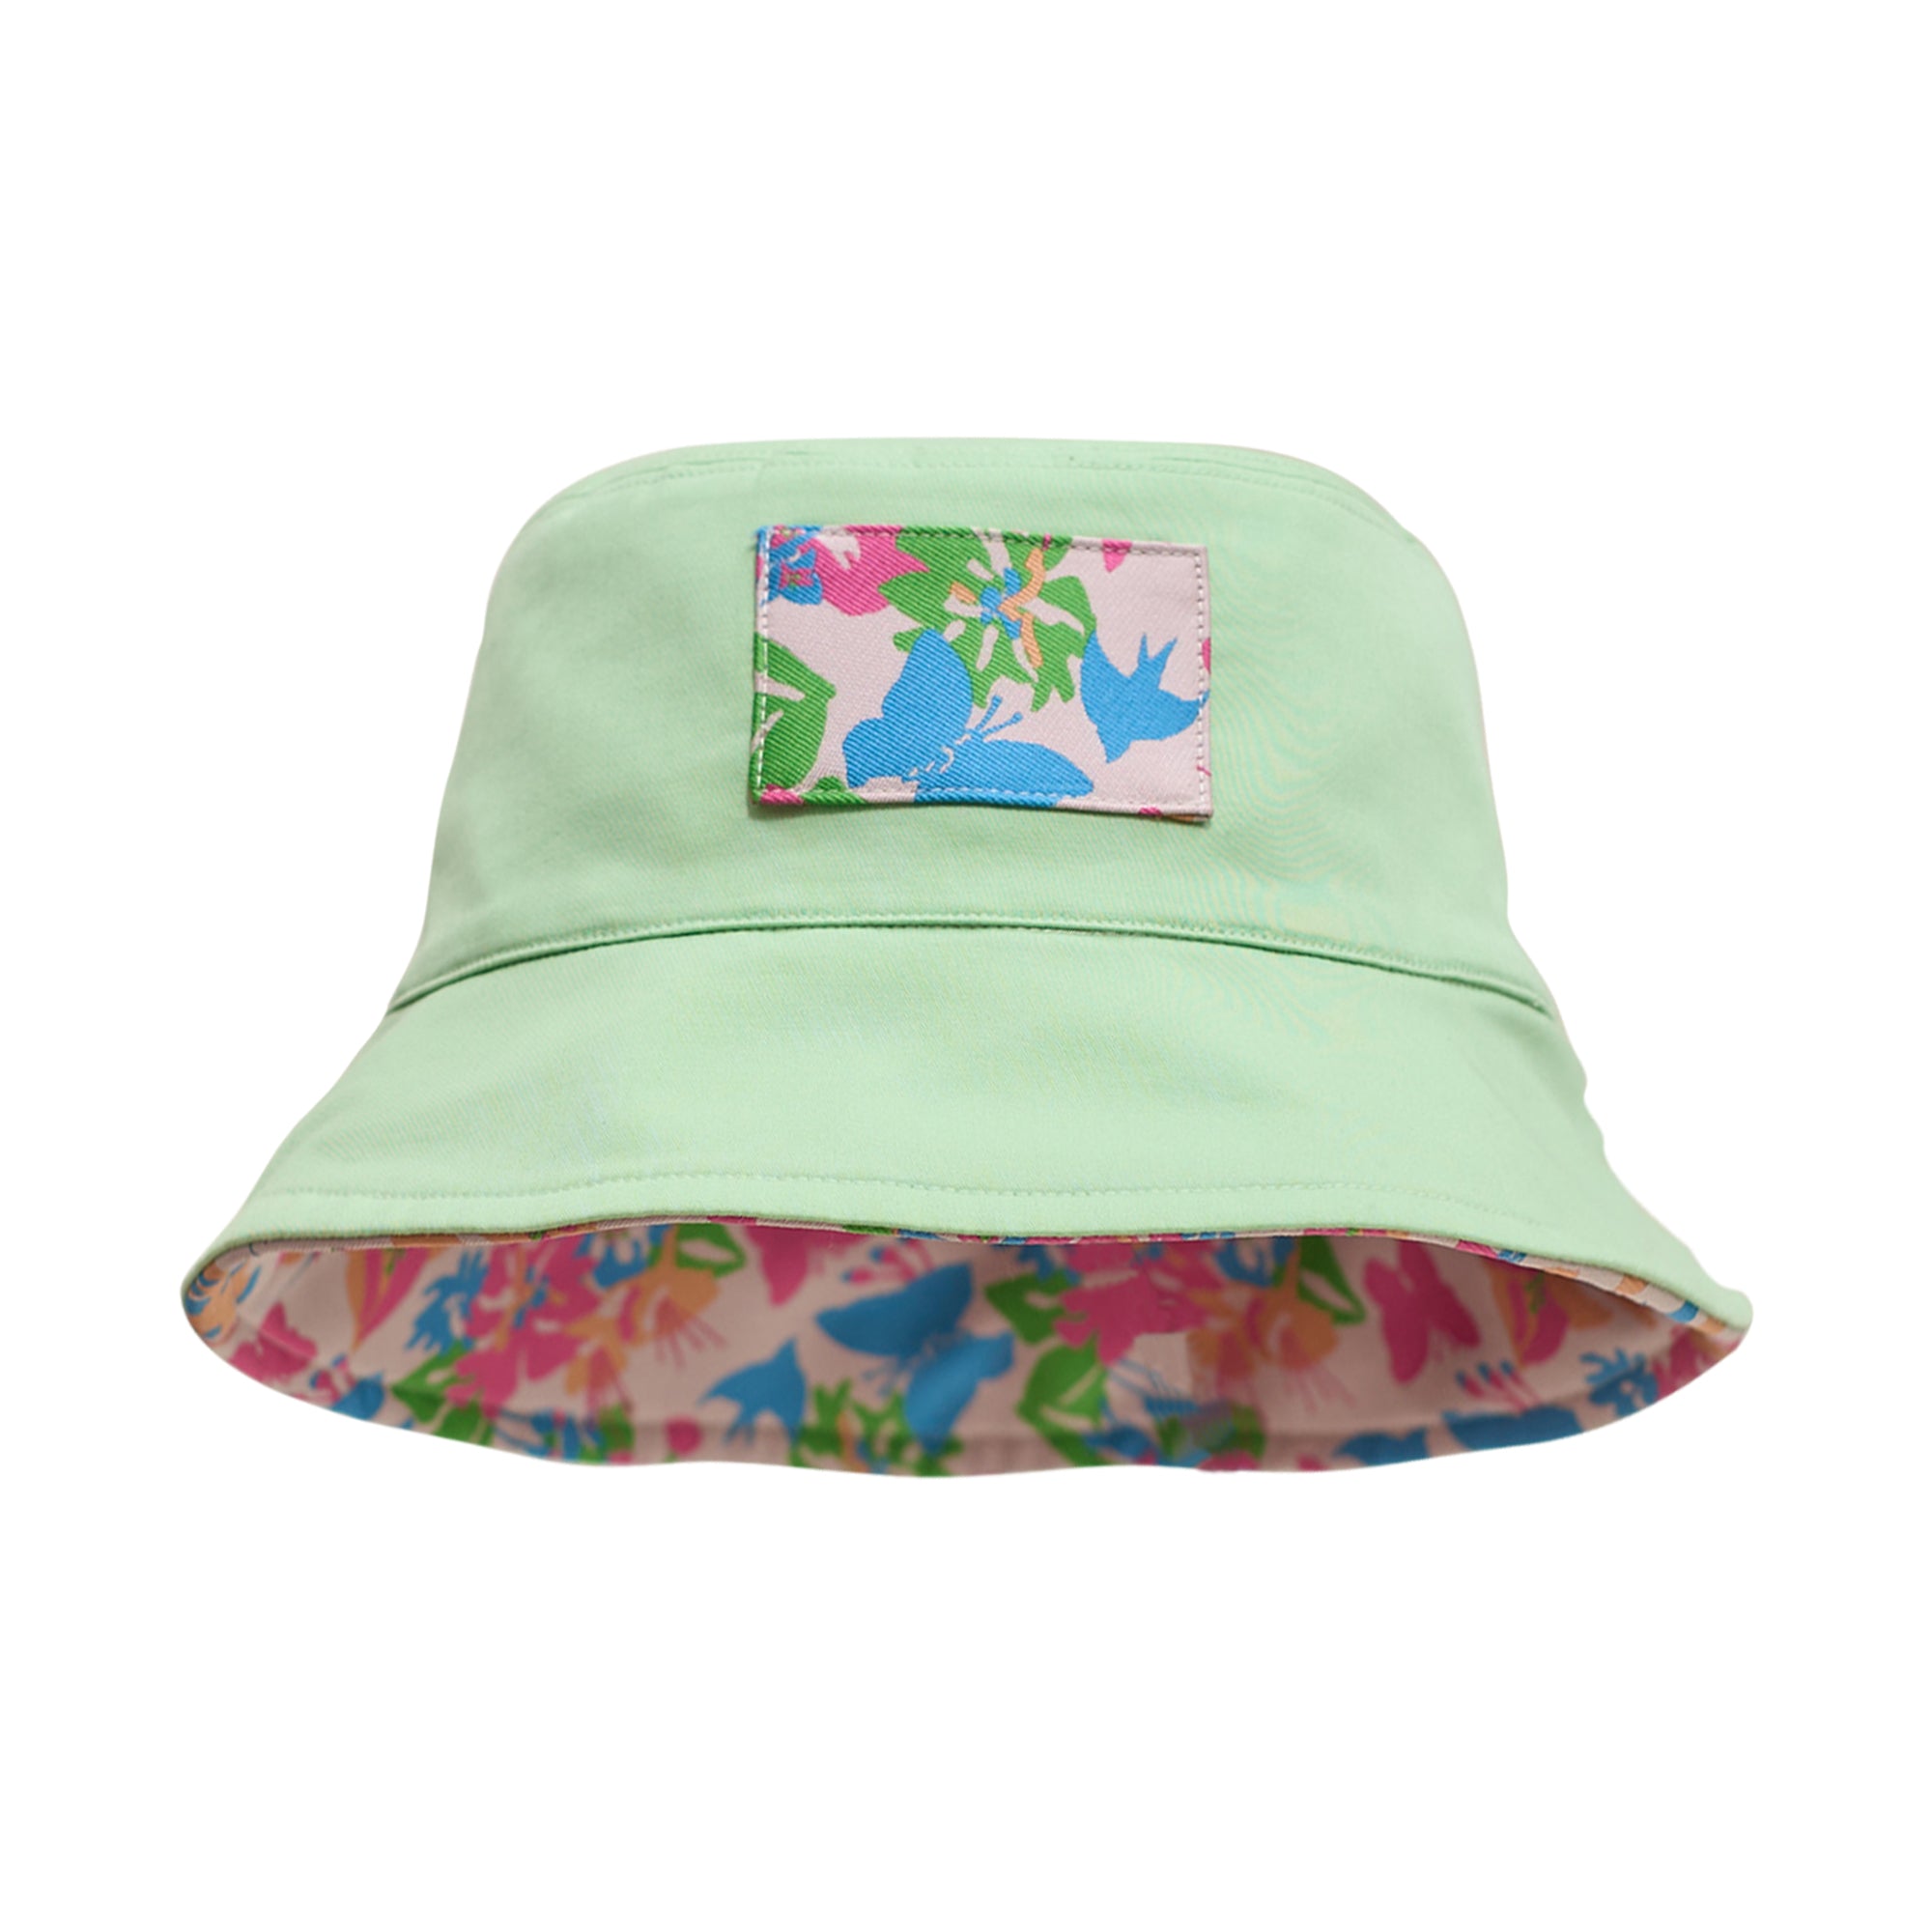 FRIDA X LOST PATTERN "Frida's Garden" Jacquard Reversible Bucket Hat - Green - Green - LOST PATTERN Hats